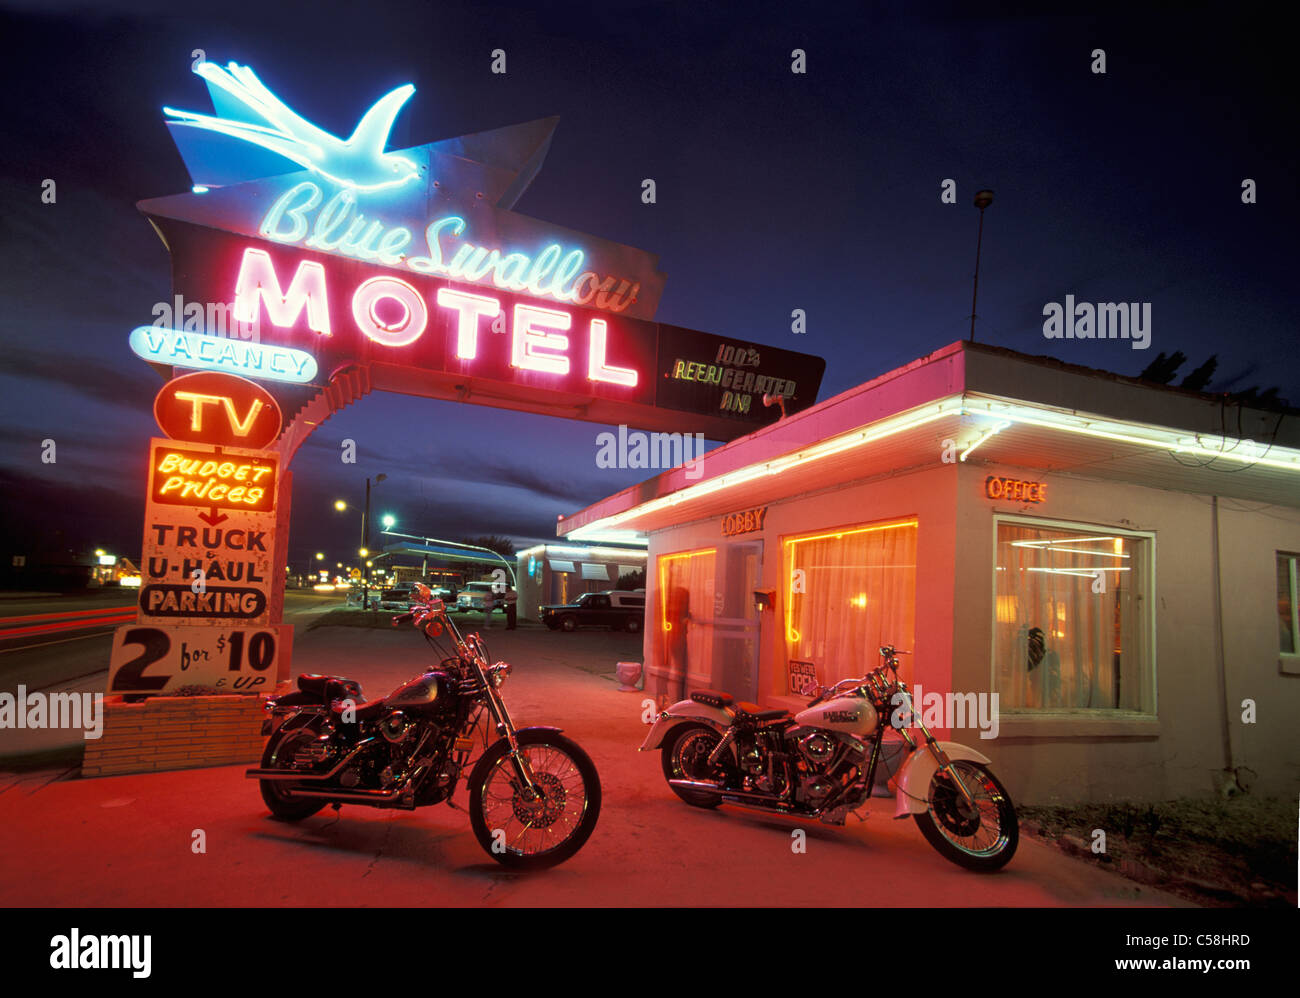 Blue swallow, Motel, Route 66, near Tucumcari, New Mexico, USA, United States, America, motor bikes Stock Photo